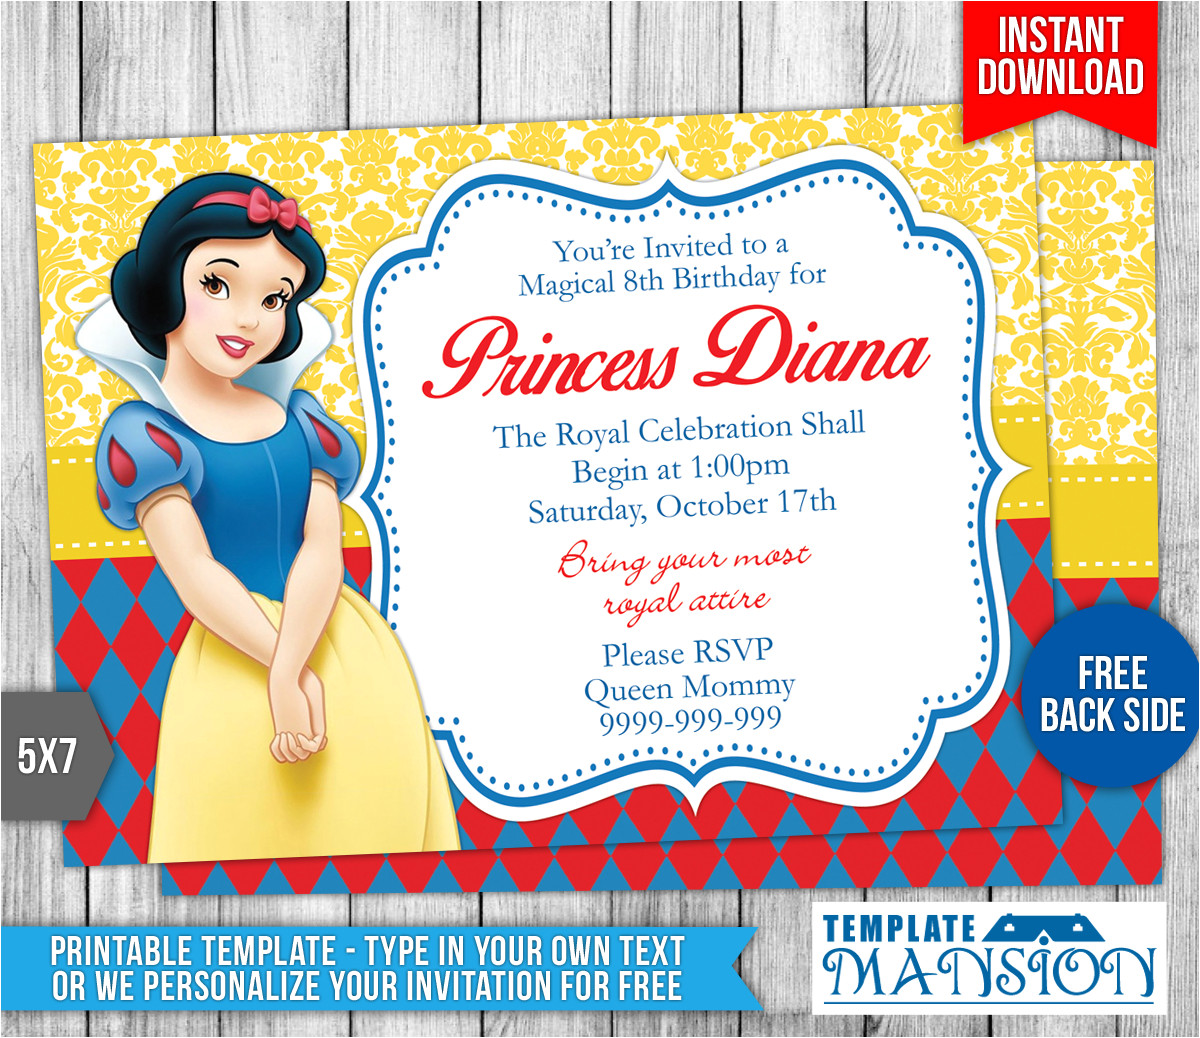 Birthday Invitation Template Snow White Snow White Birthday Invitation Template 3 by